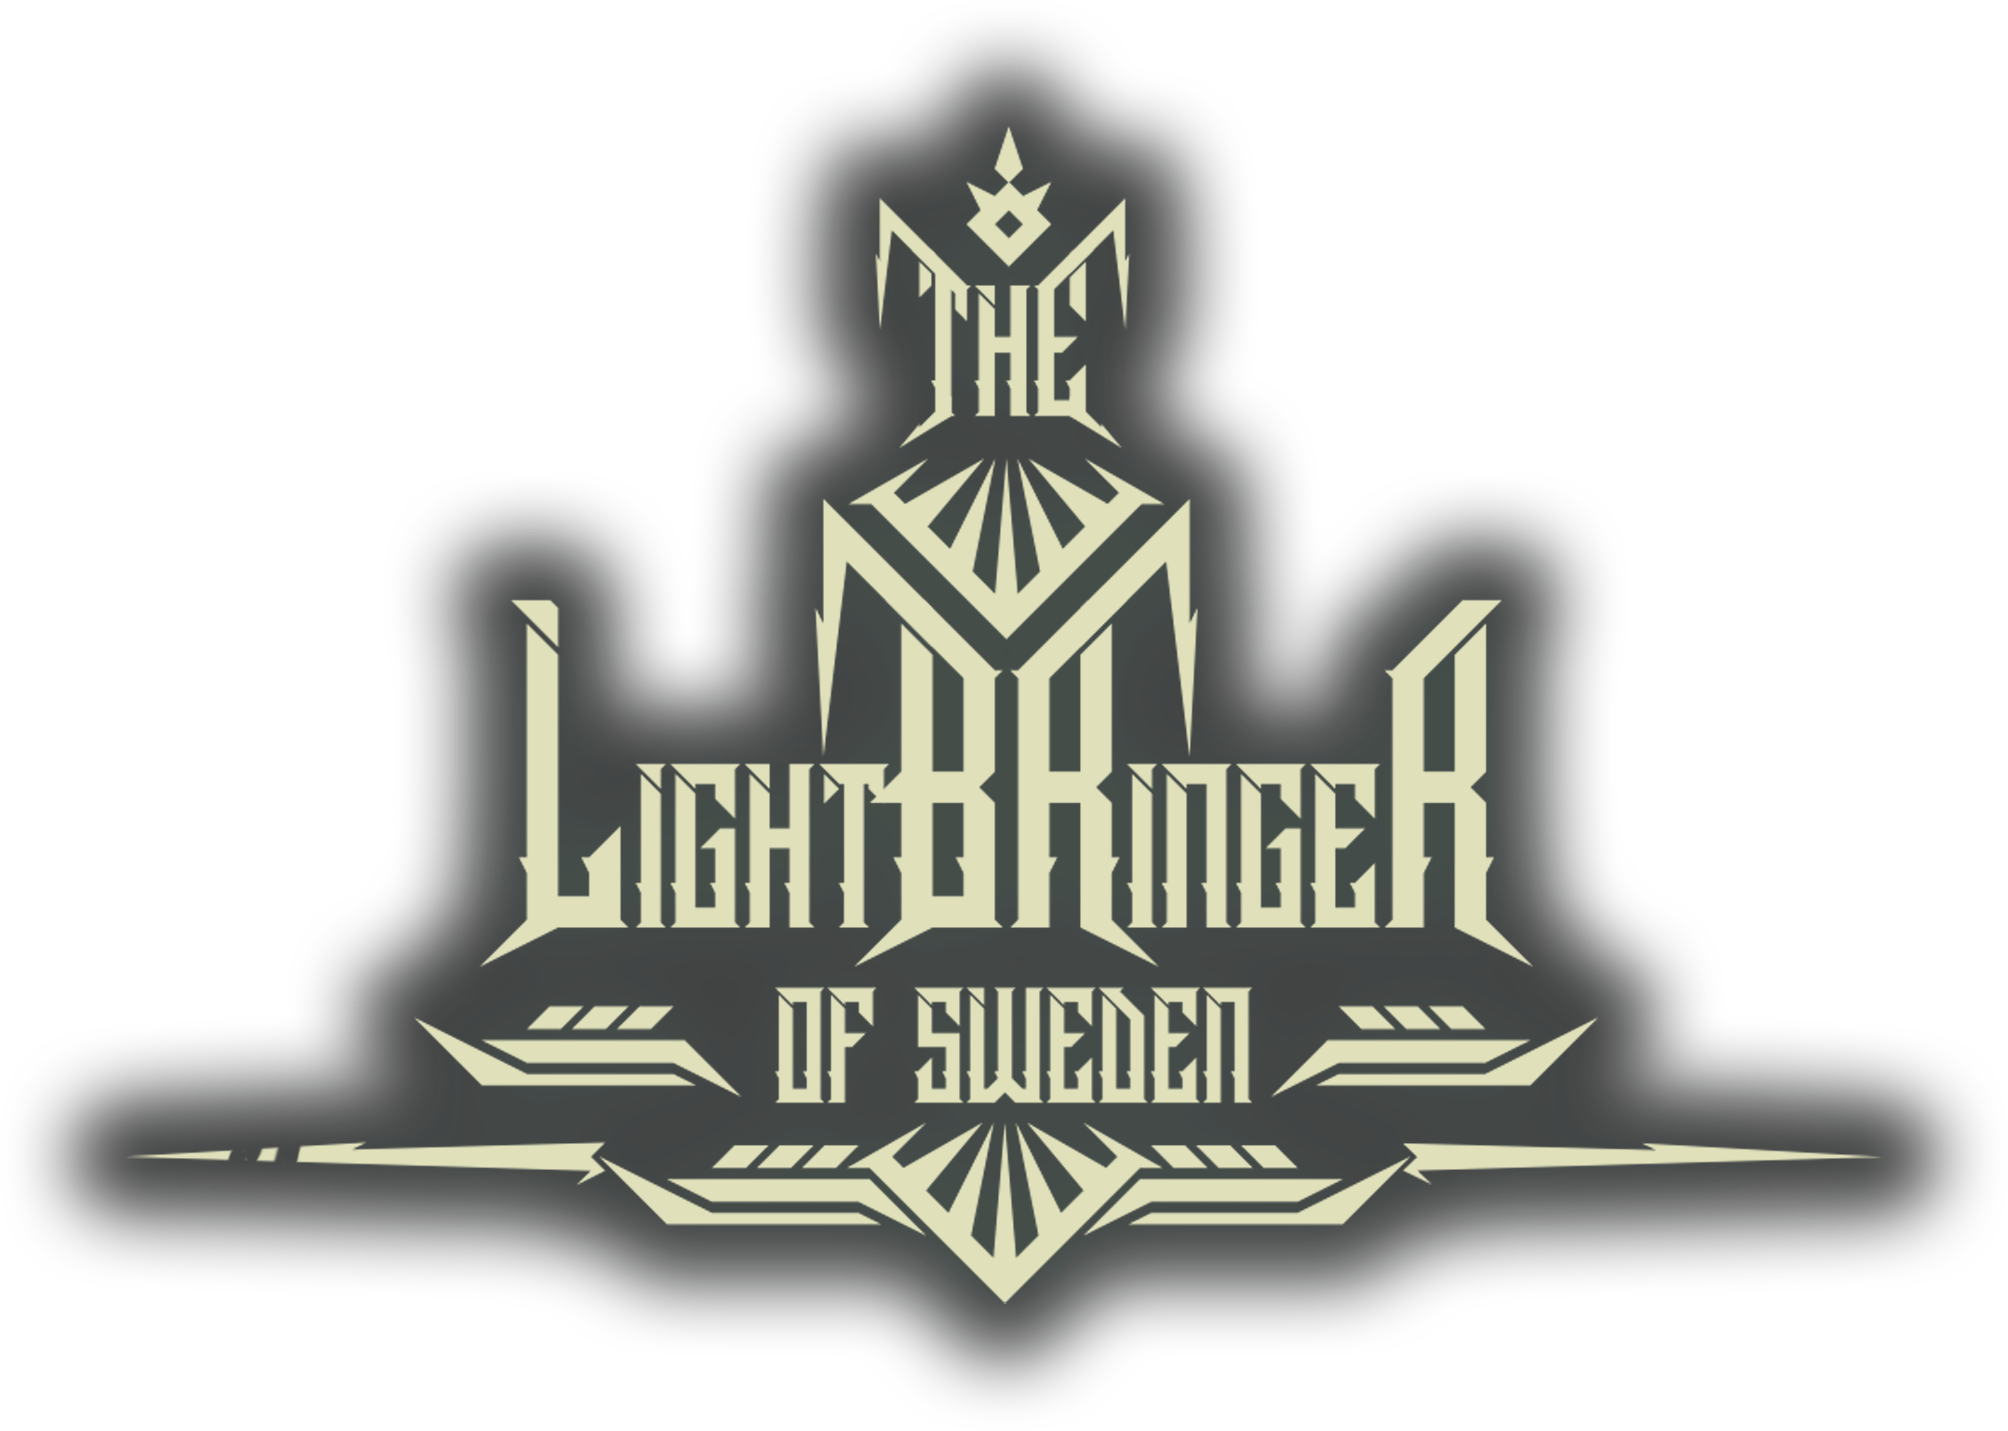 The Lightbringer of Sweden